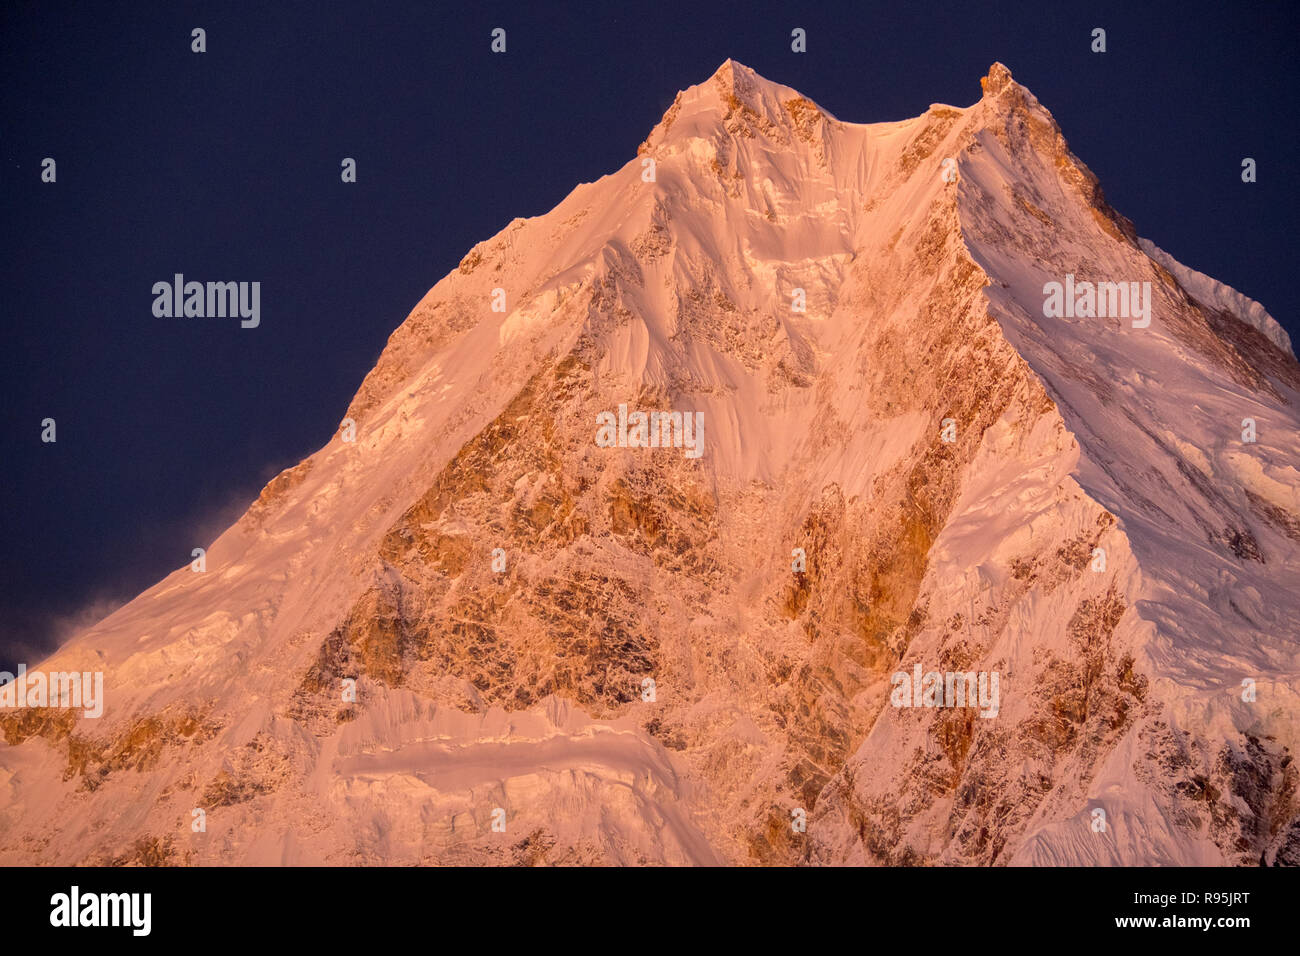 Manaslu Manasulu The Worlds 8th Highest Mountain In The Nepal